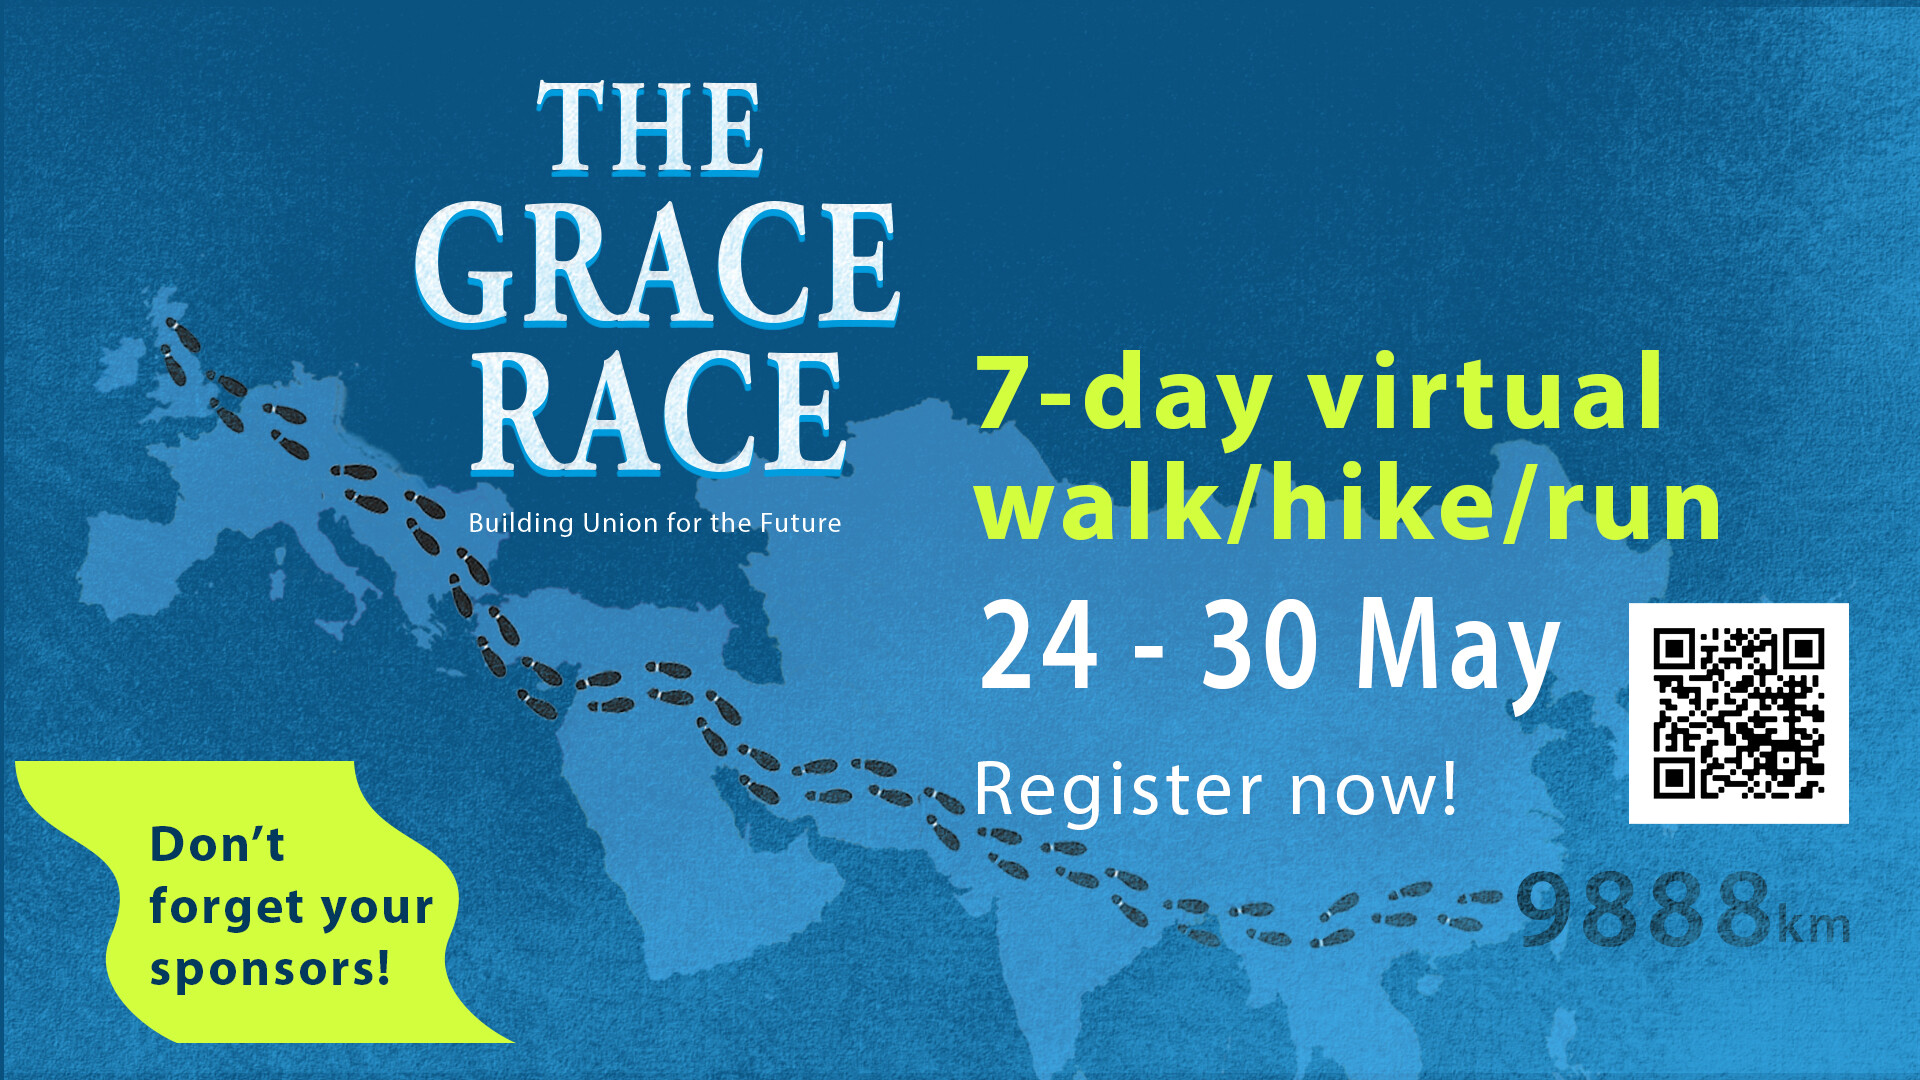 The Grace Race - get your sponsors!